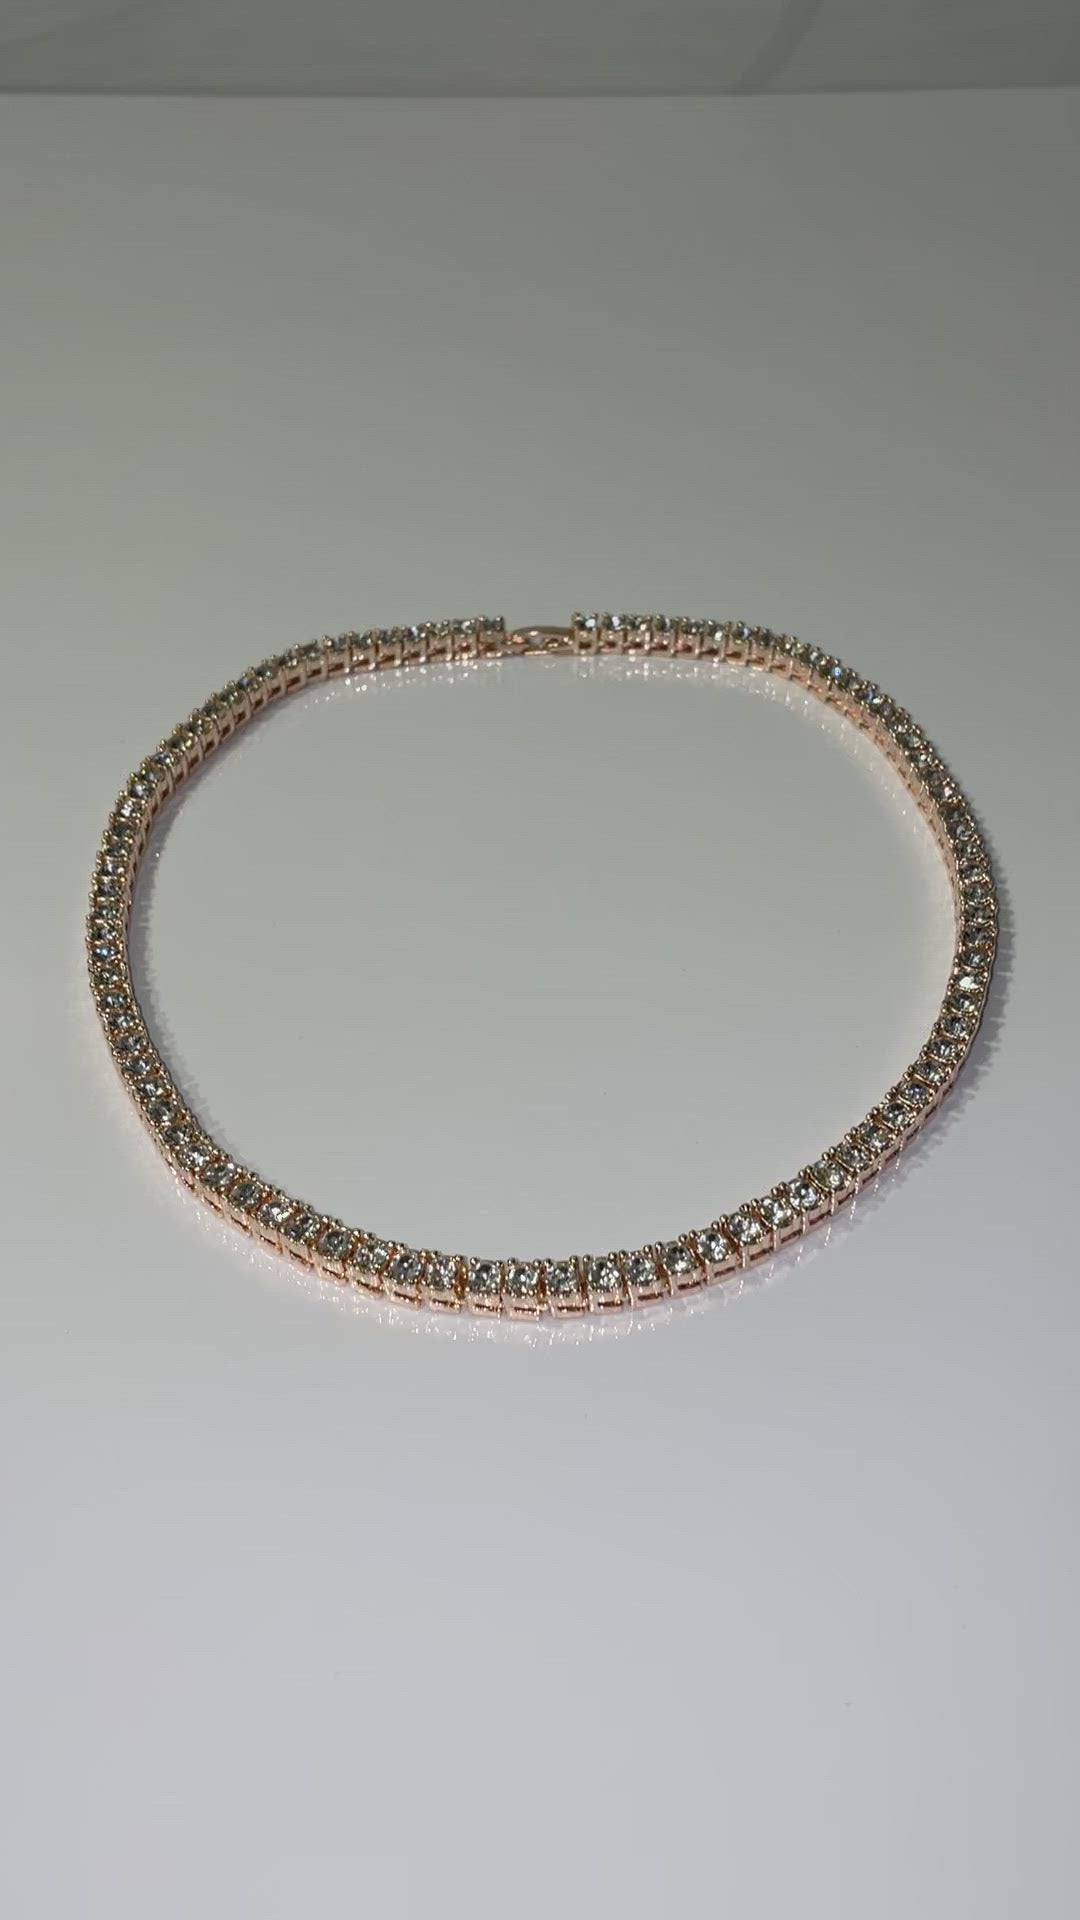 rhinestone rose gold tennis necklace